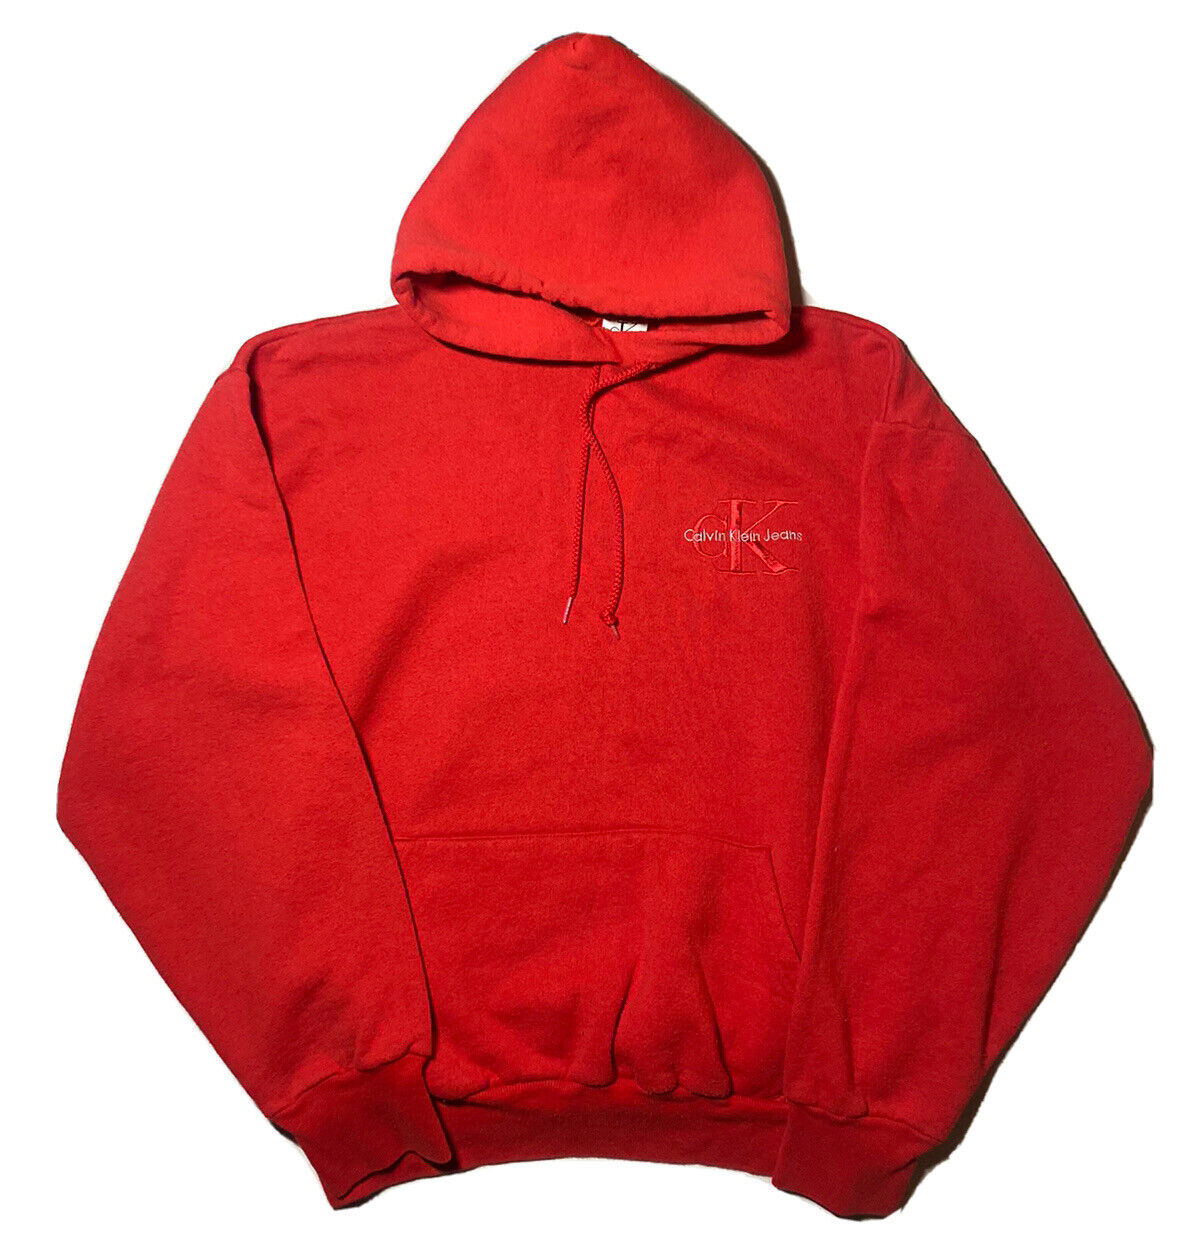 vertrouwen Petulance Spreek uit Vintage 90s Calvin Klein Men's Hoodie Sweat Shirt Size Medium Red | eBay